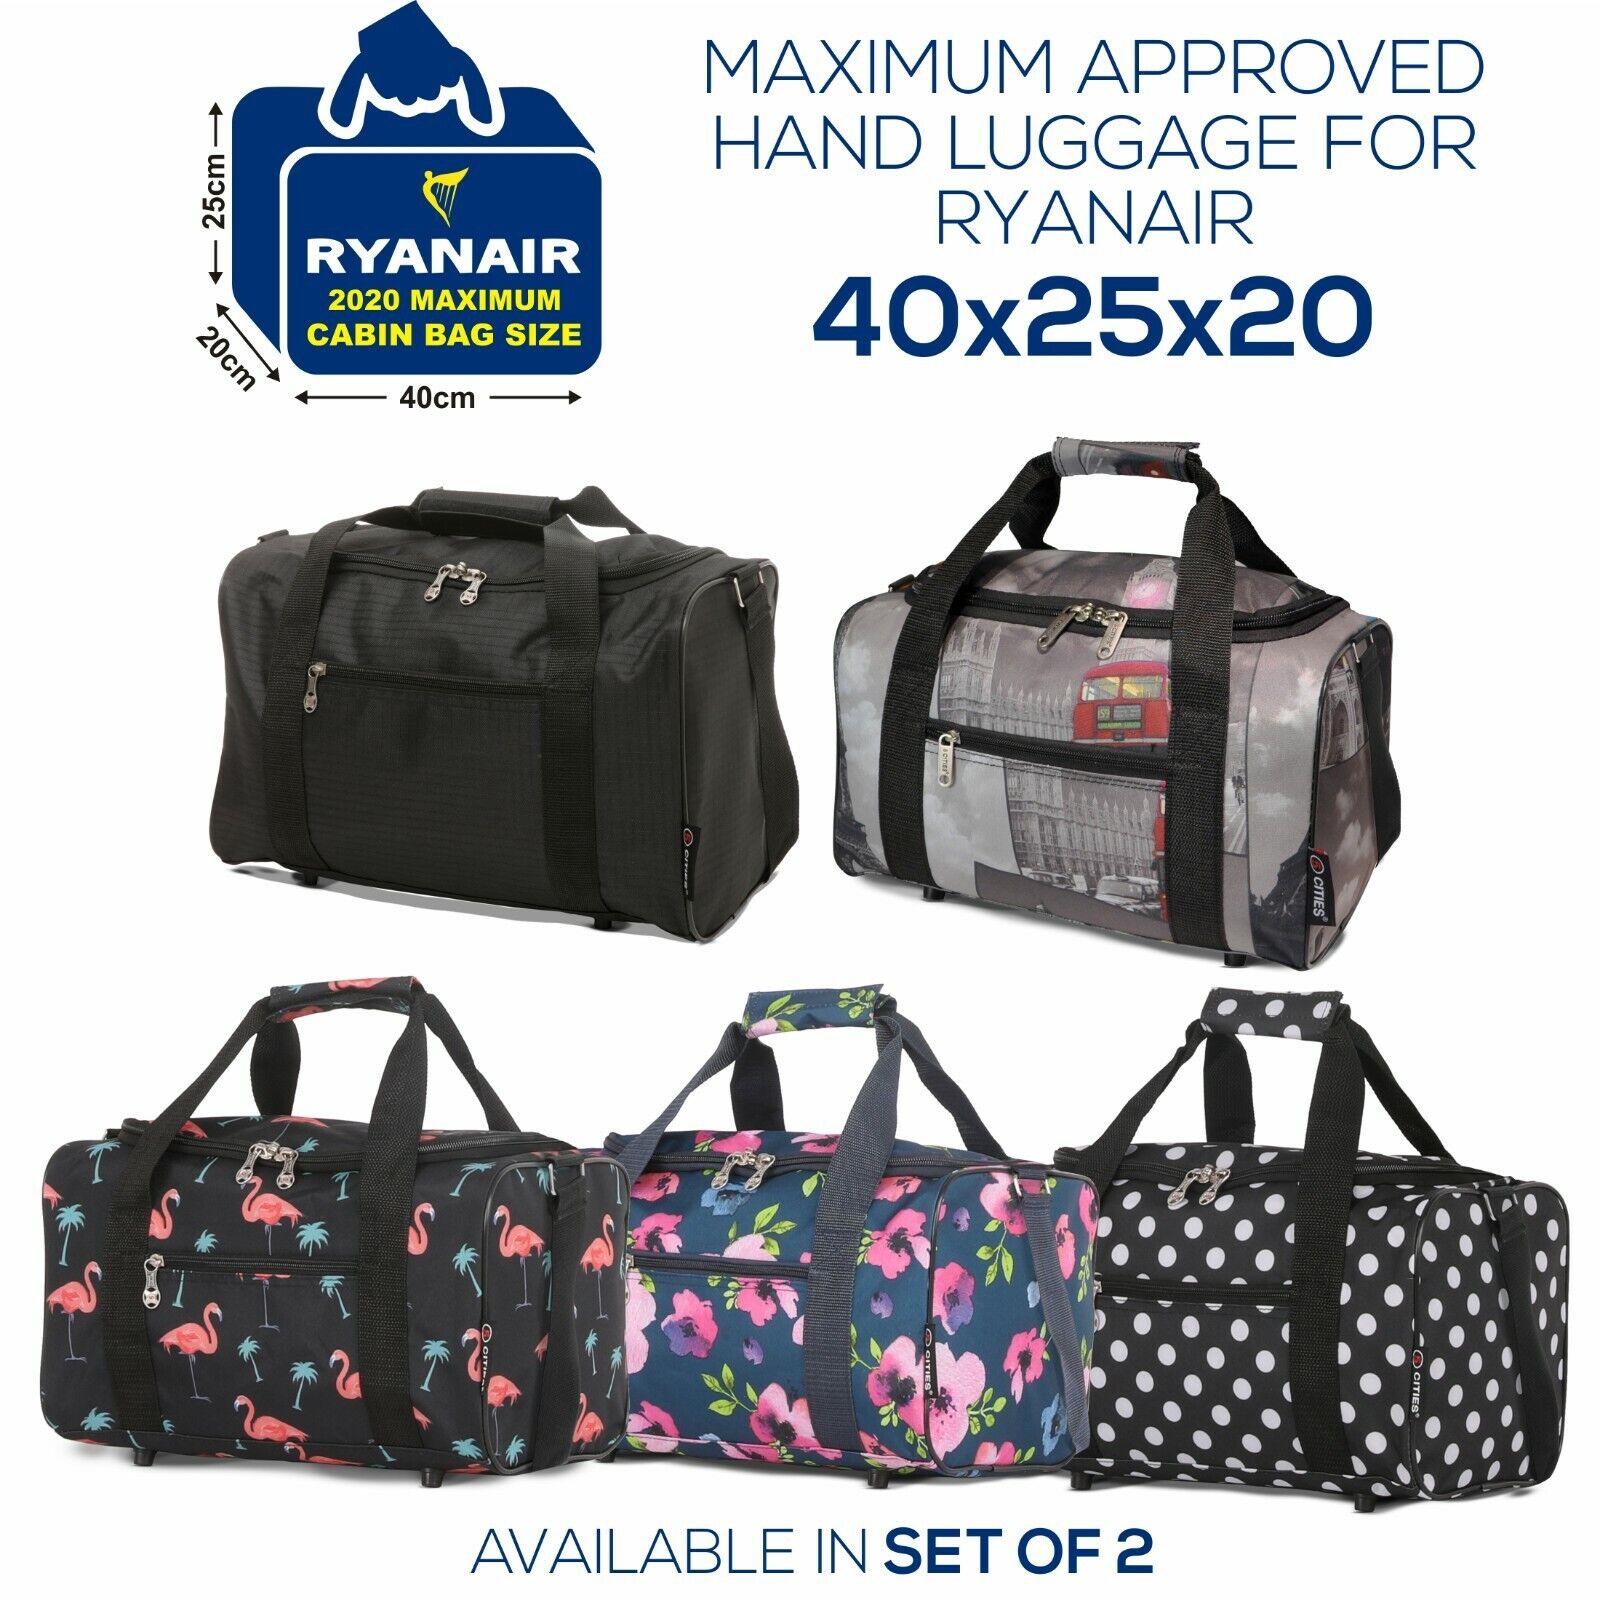 Perplejo Amante lema 5 Cities 40x20x25 Ryanair Maximum Sized Cabin Bag Carry on Holdall Flight  Bags | eBay